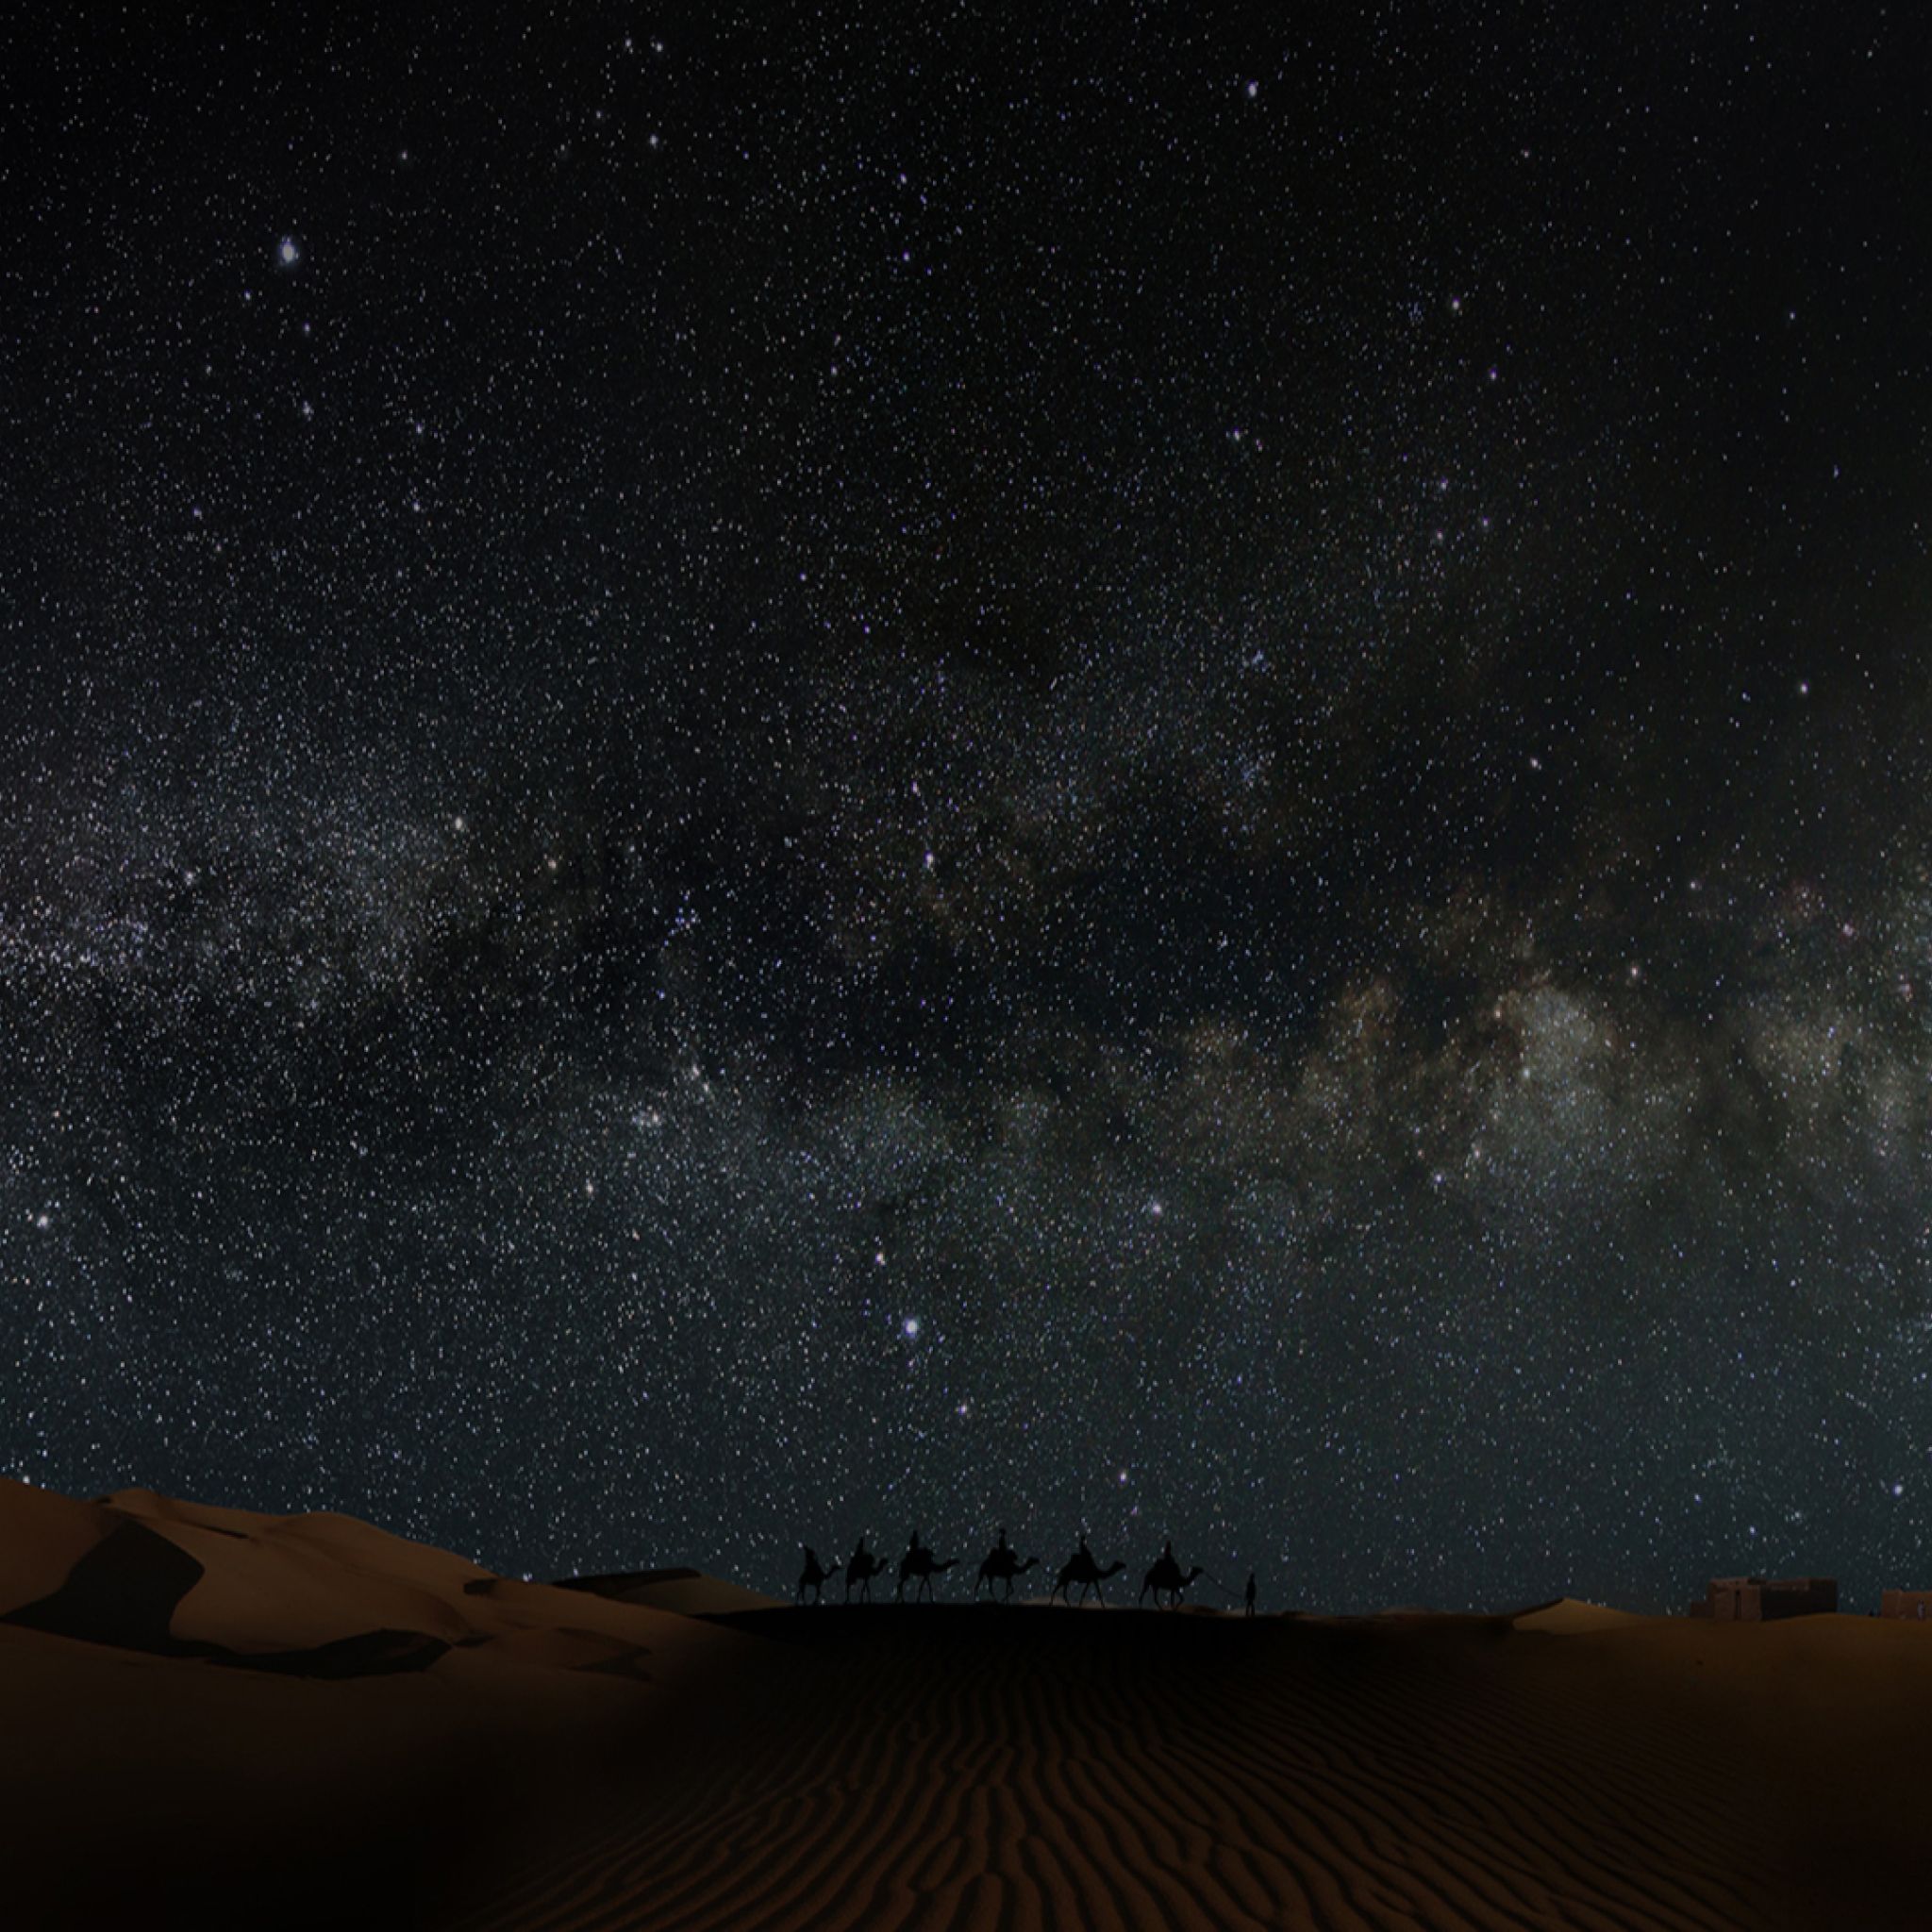 Sahara Desert in Scenery Night iPad Air Wallpaper, HD Nature 4K Wallpaper, Image, Photo and Background